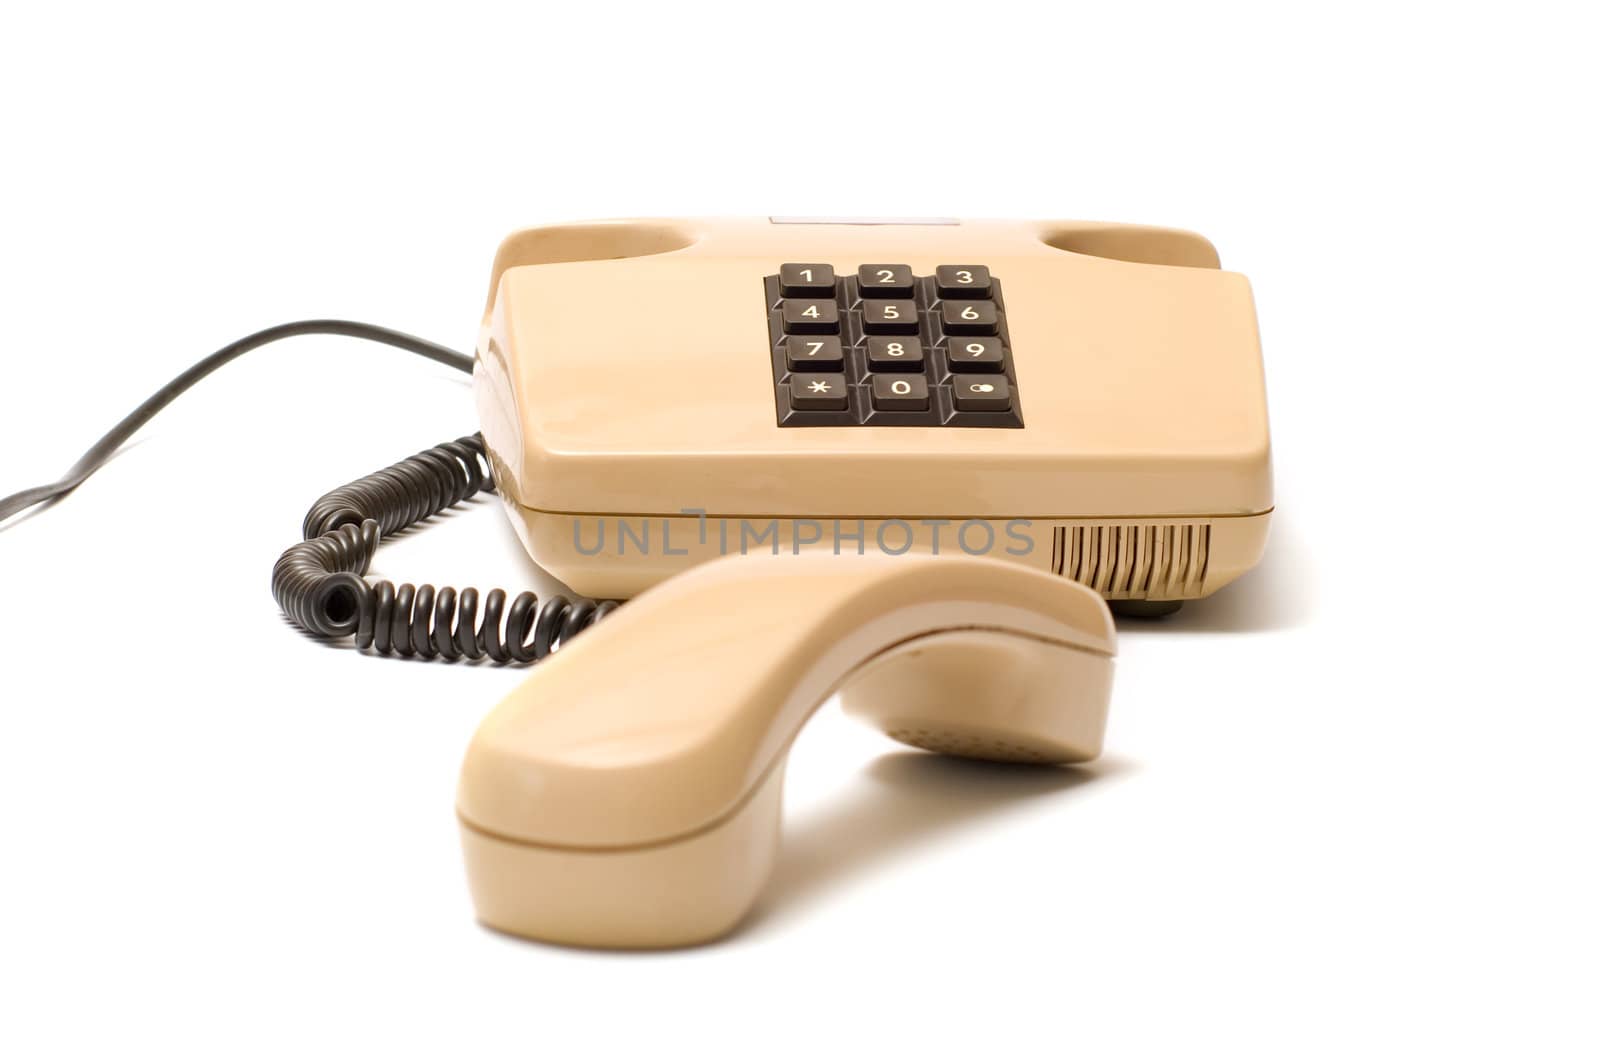 Telephone. by kromeshnik